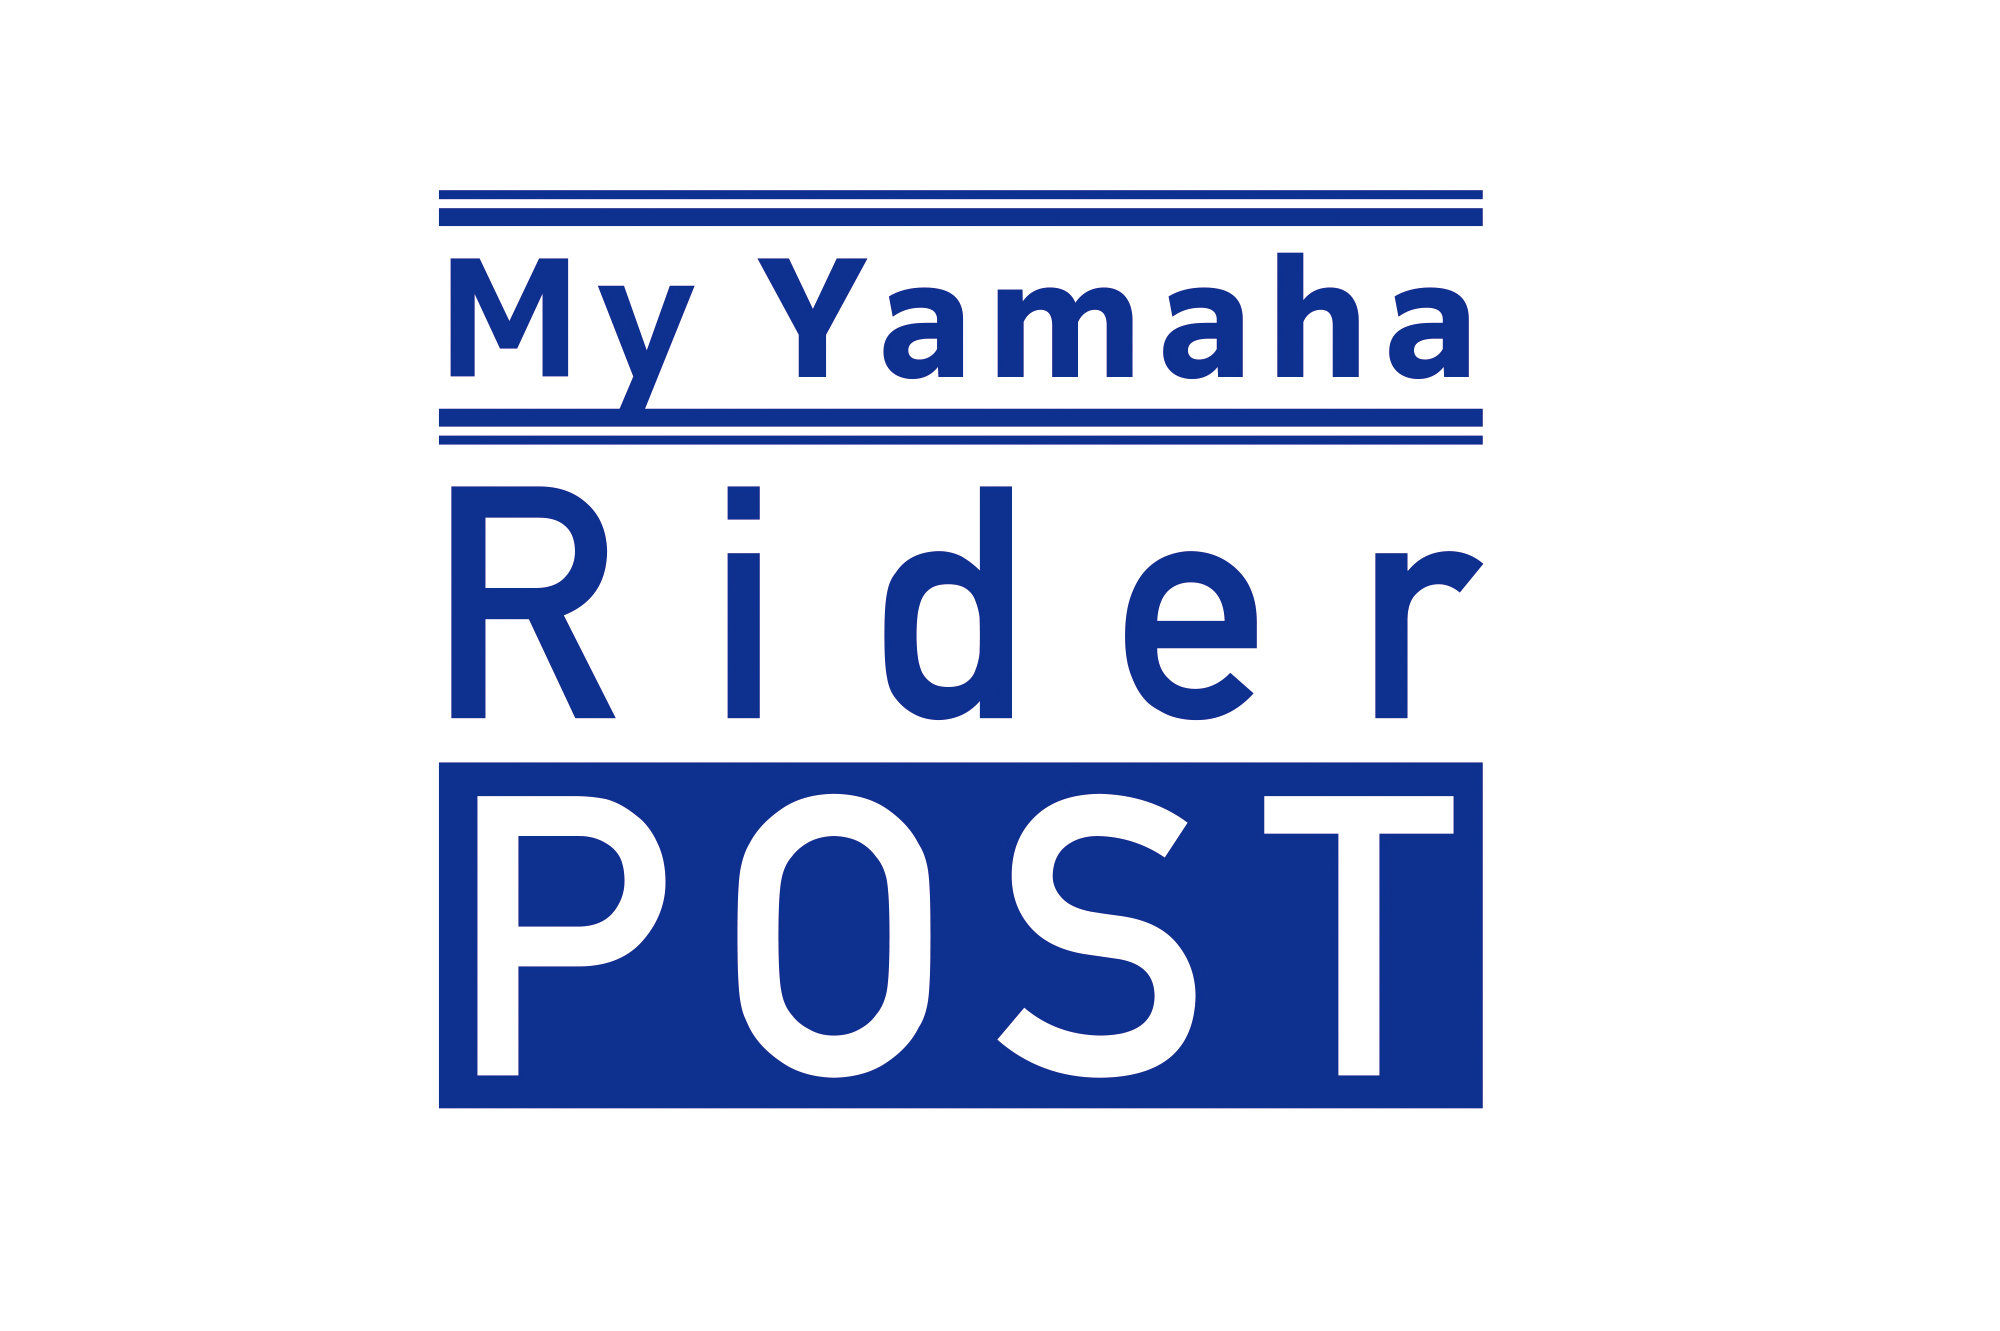 「My Yamaha Rider POST」